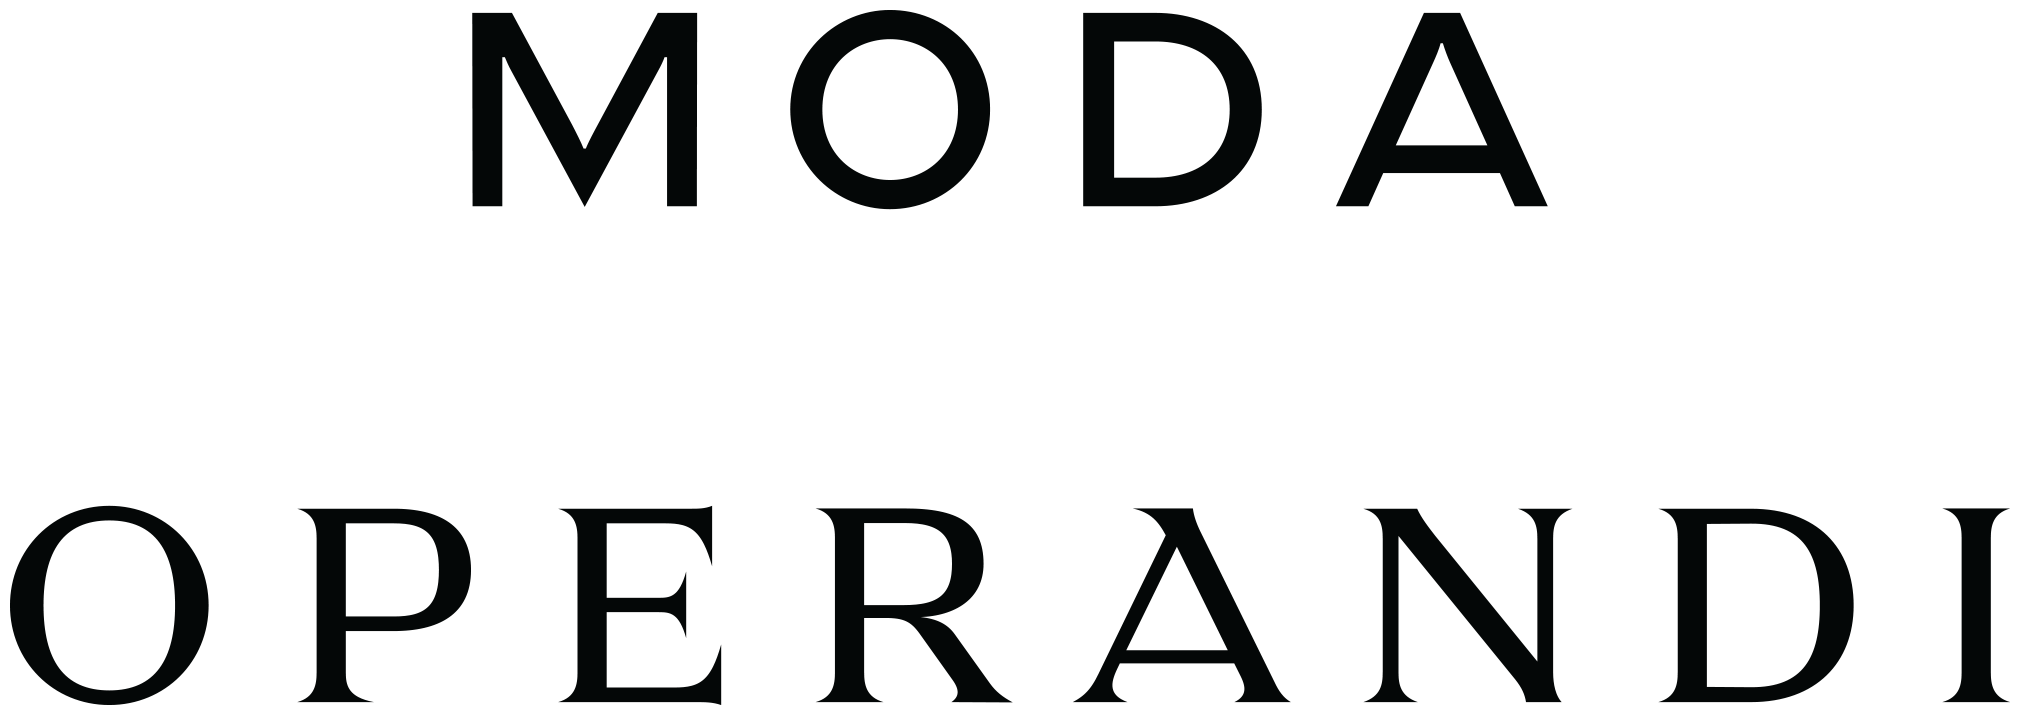 Moda Operandi Coupons & Reviews ModeSens